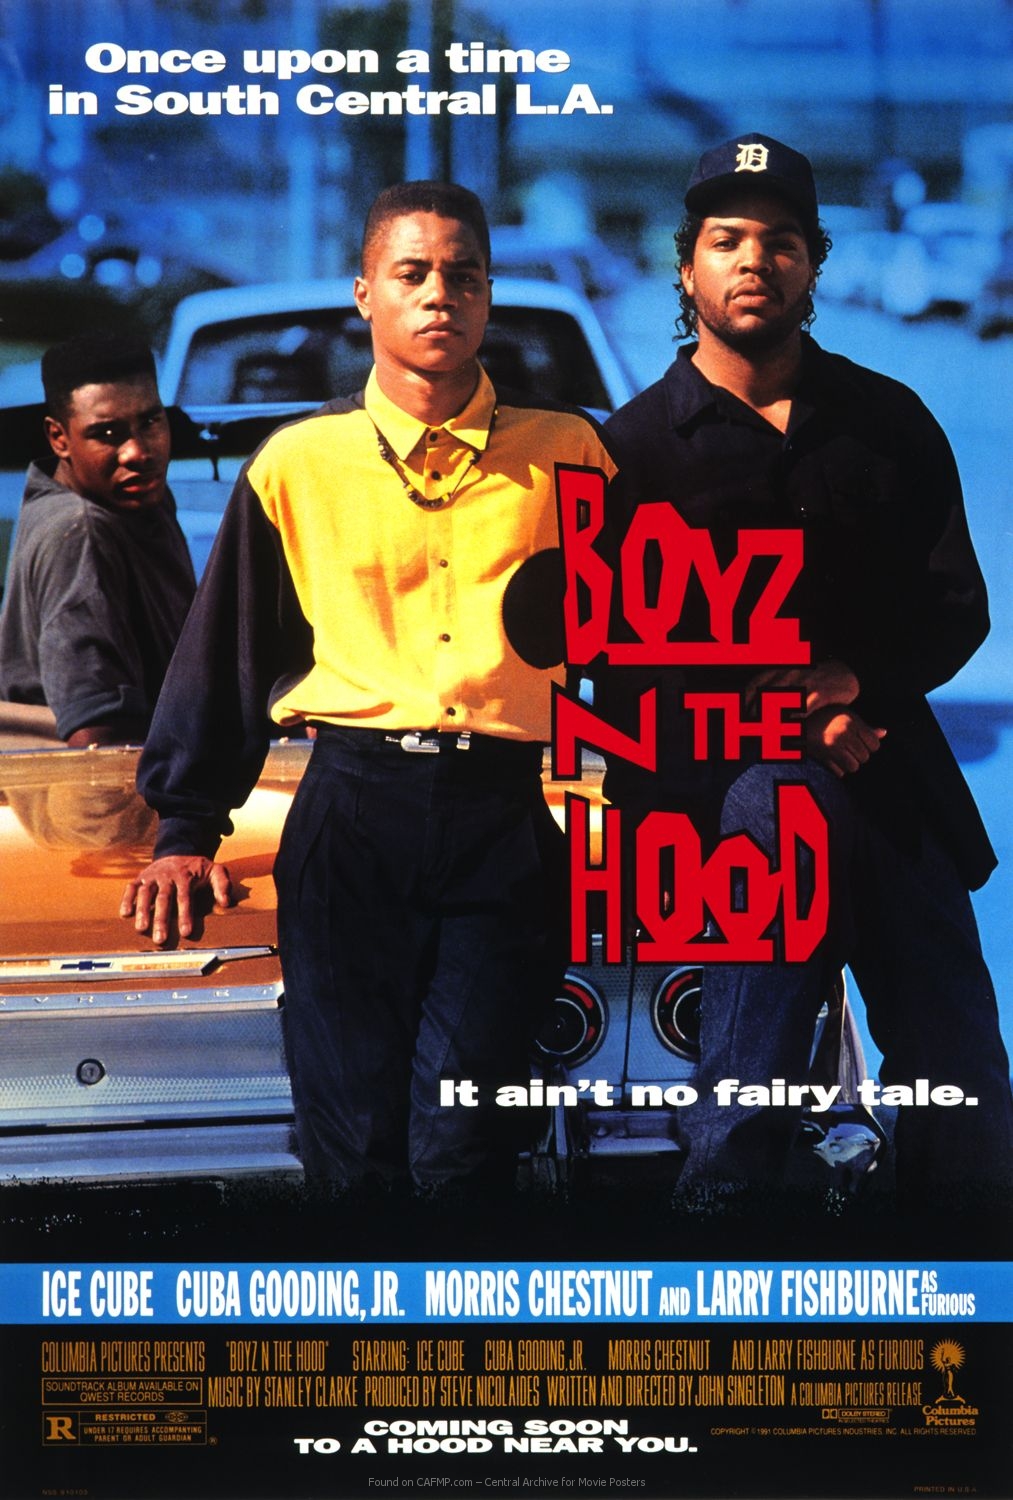 director of boyz n the hood